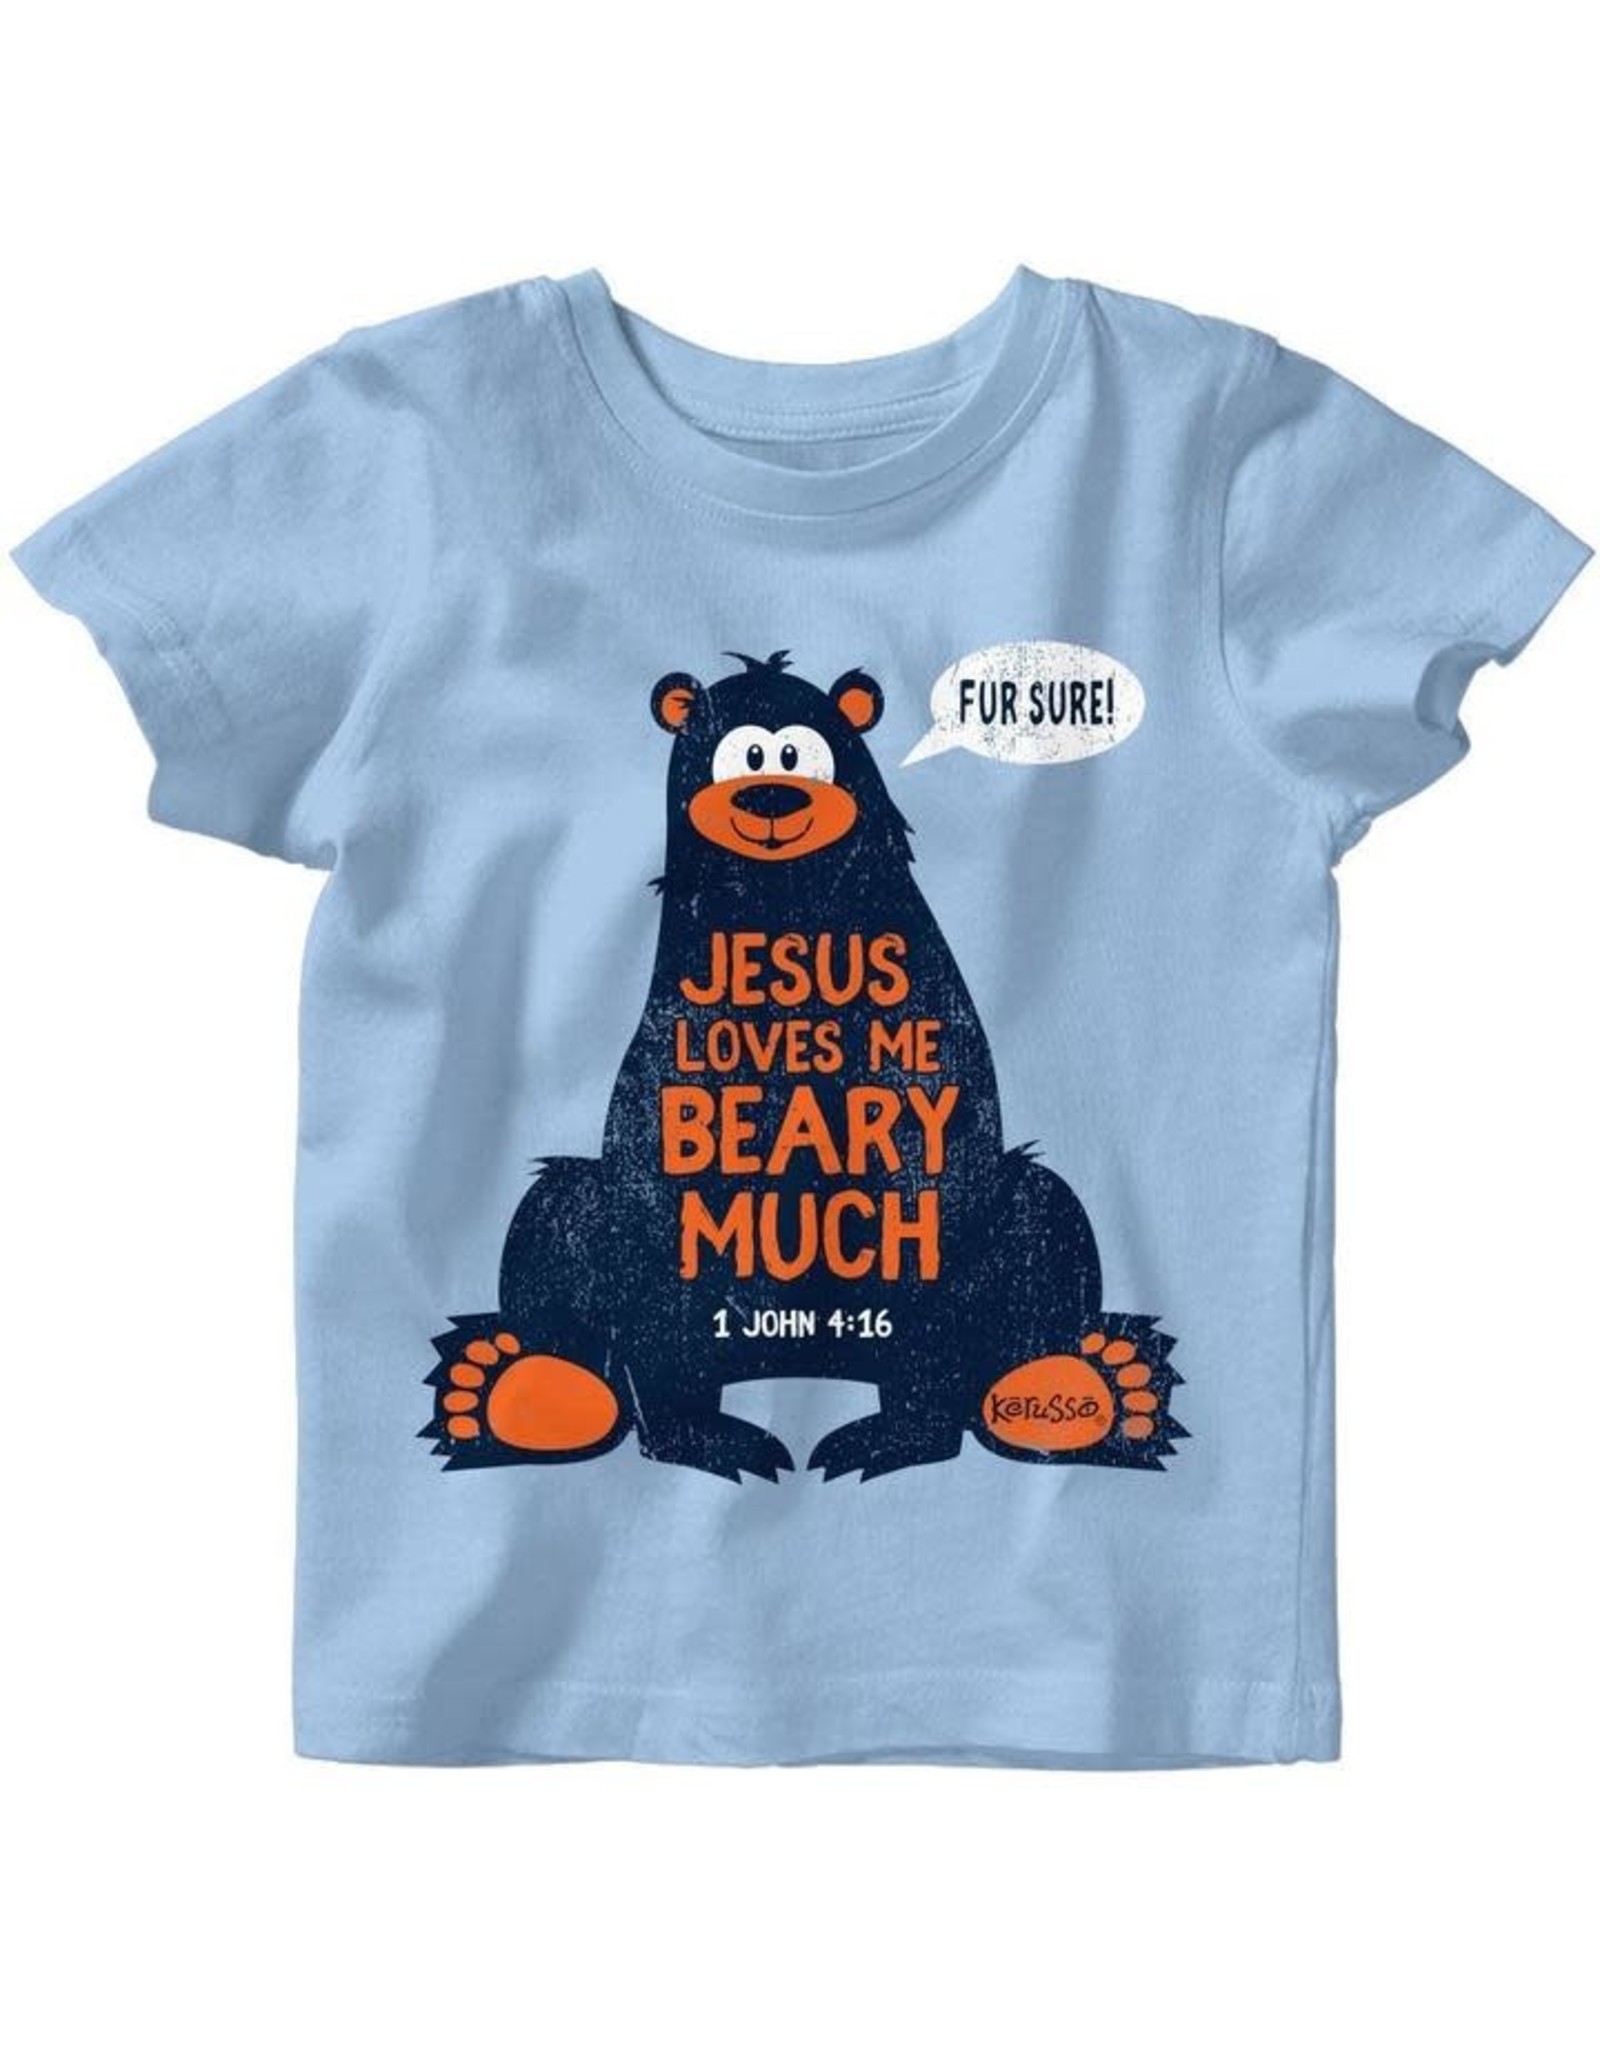 Kerusso Kidz Baby Shirt - Jesus Loves Me Beary Much